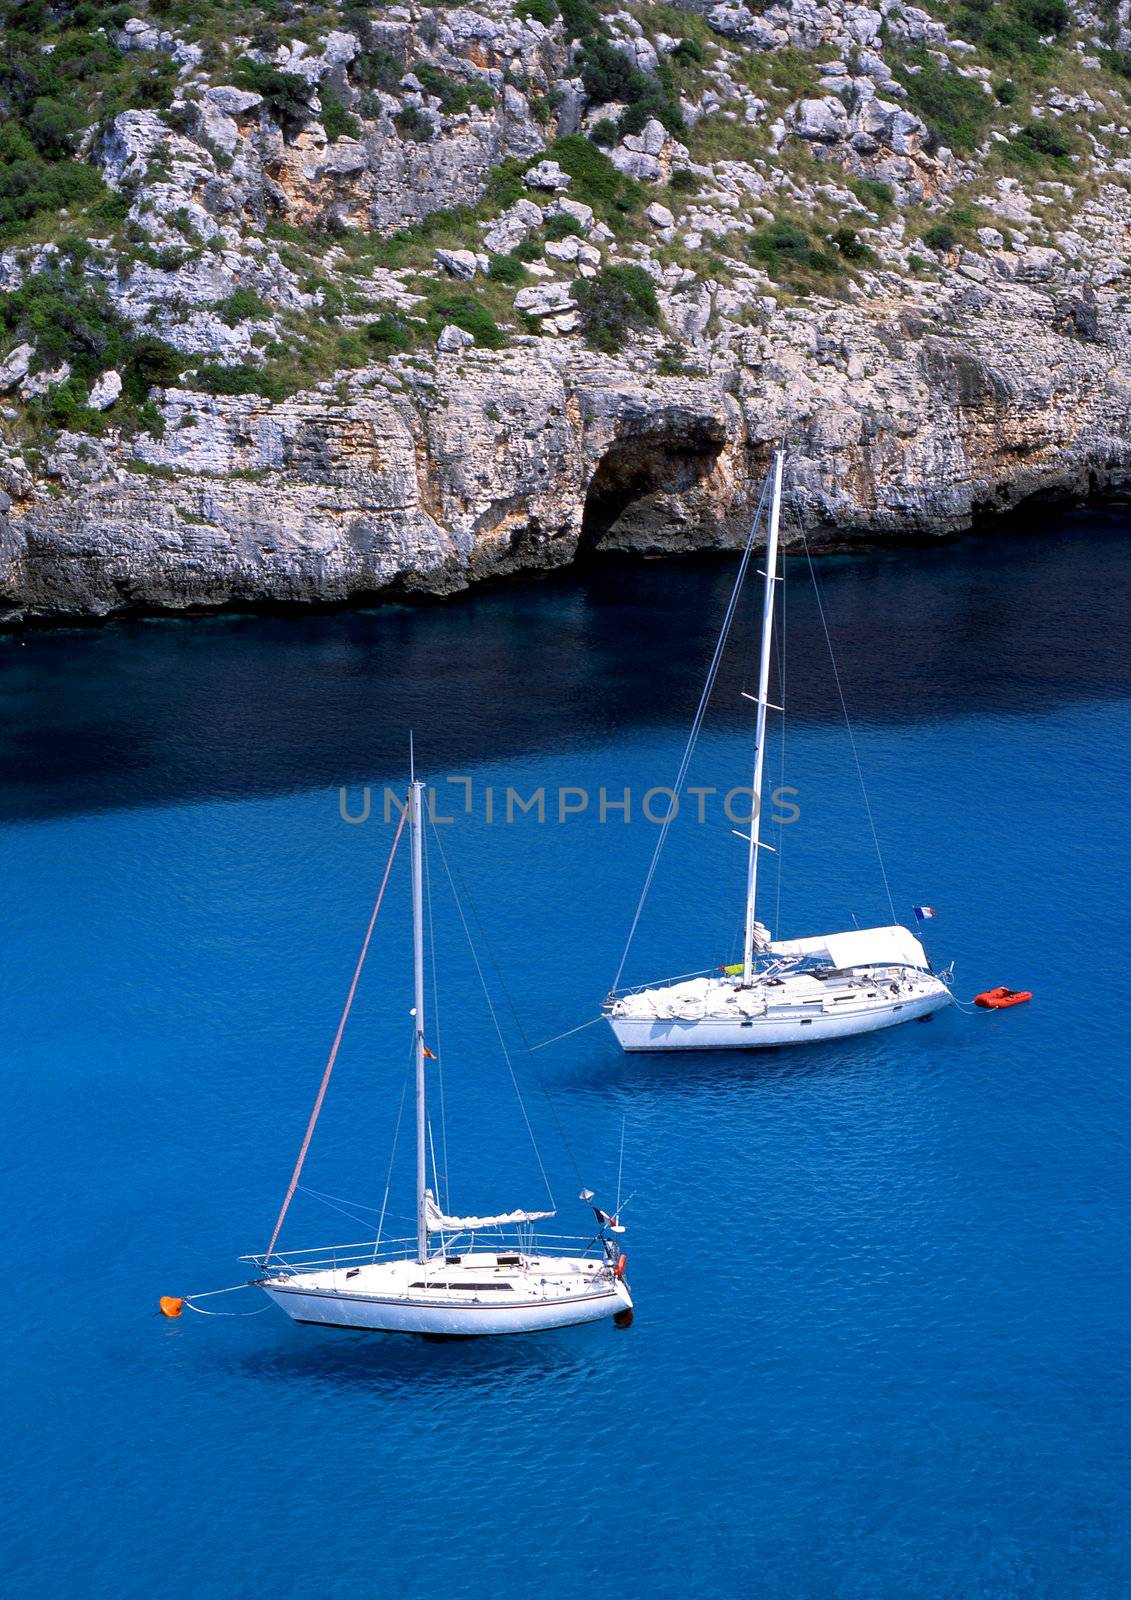 Two sail boats in the bay of Paleokastritsa on the greek island of Corfu